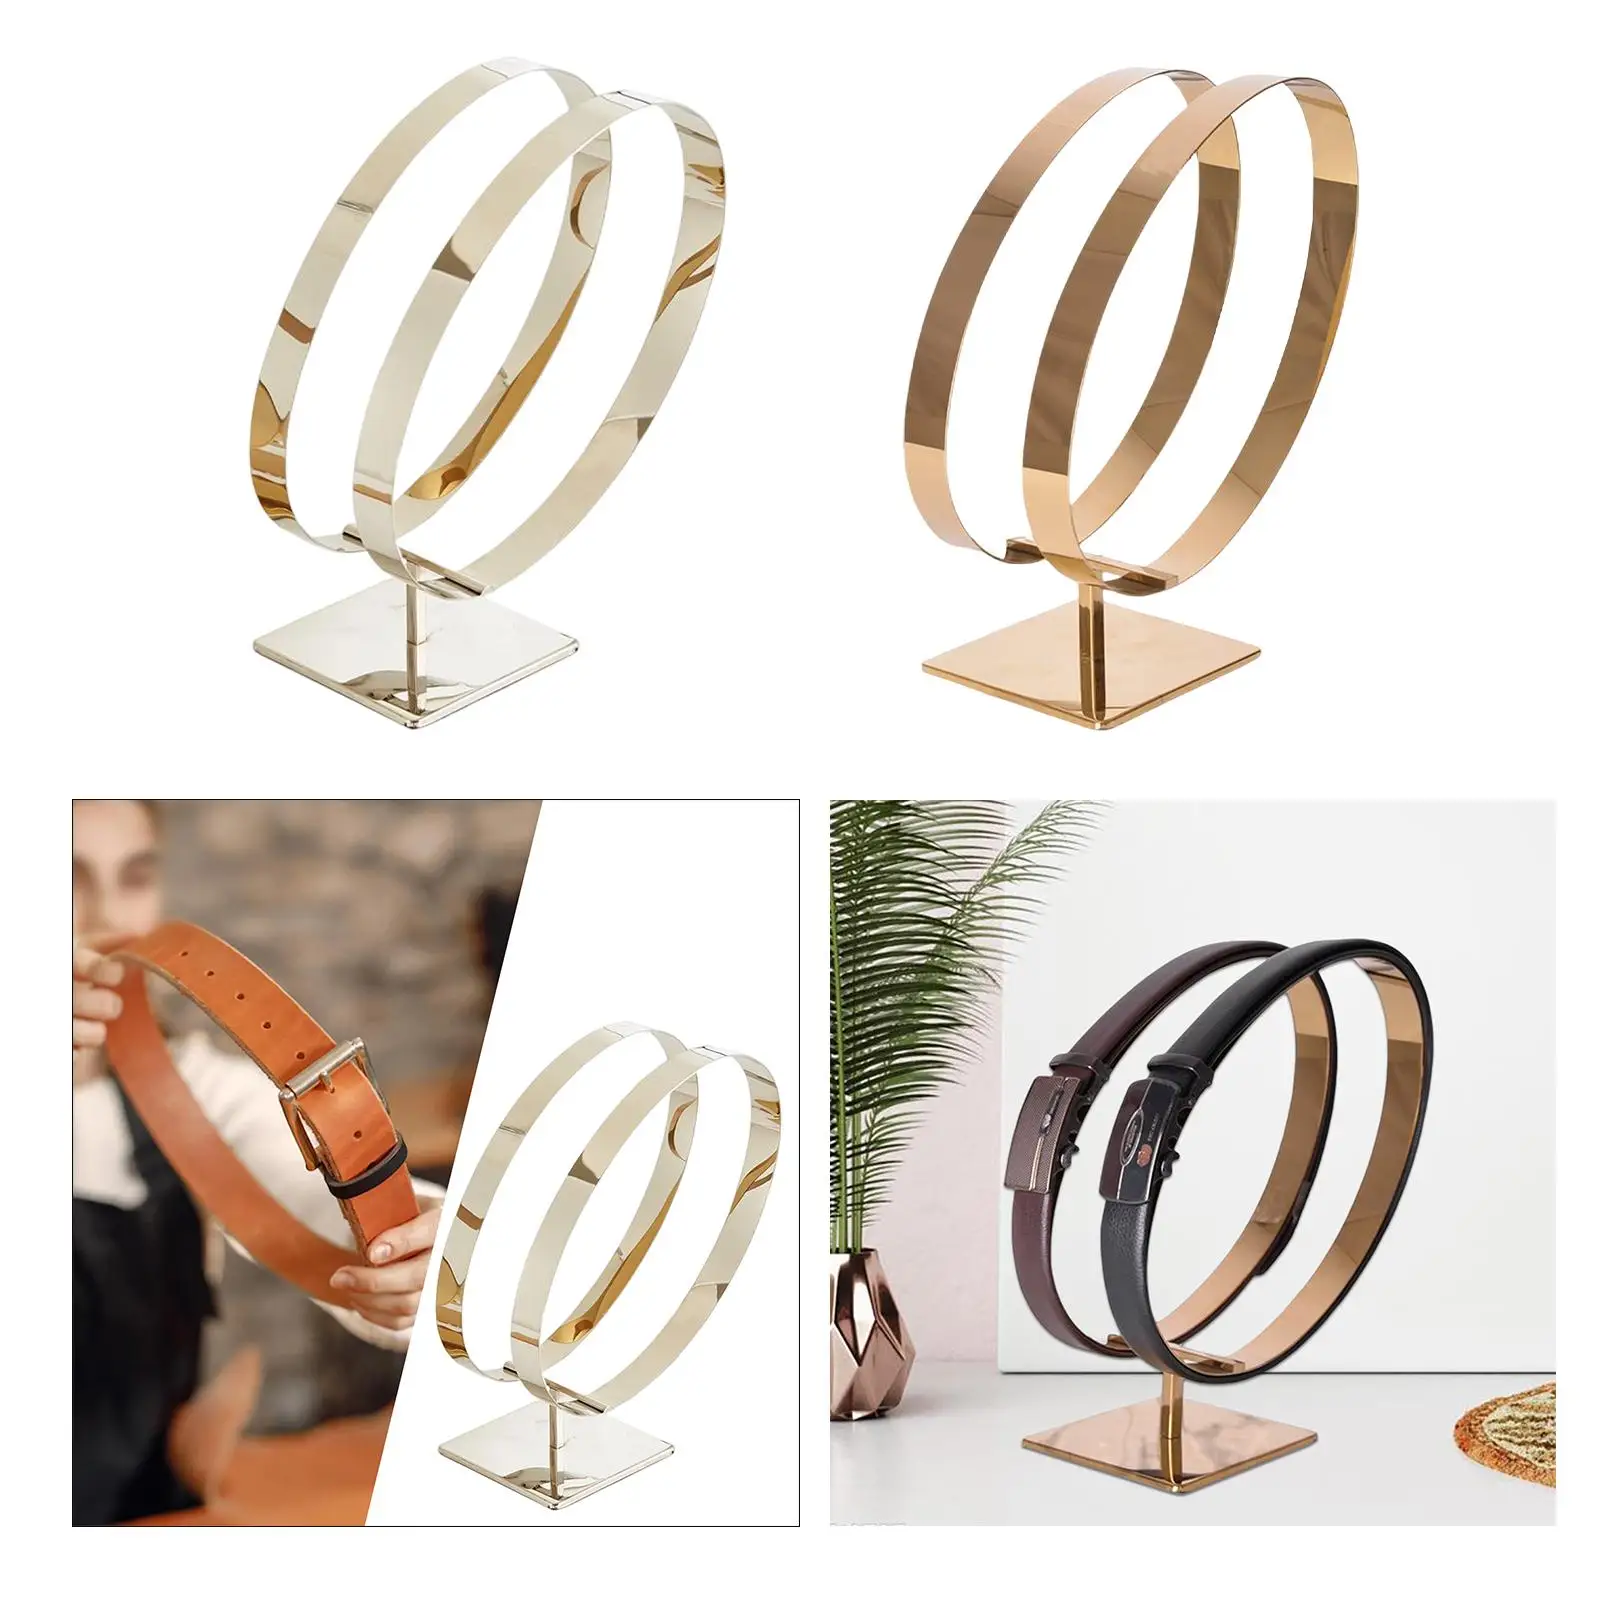 Stainless Steel Belt Display Stands Double Loop Decorative Display Shelf Case Organizer Rack Holder for Store Show Bedroom Women